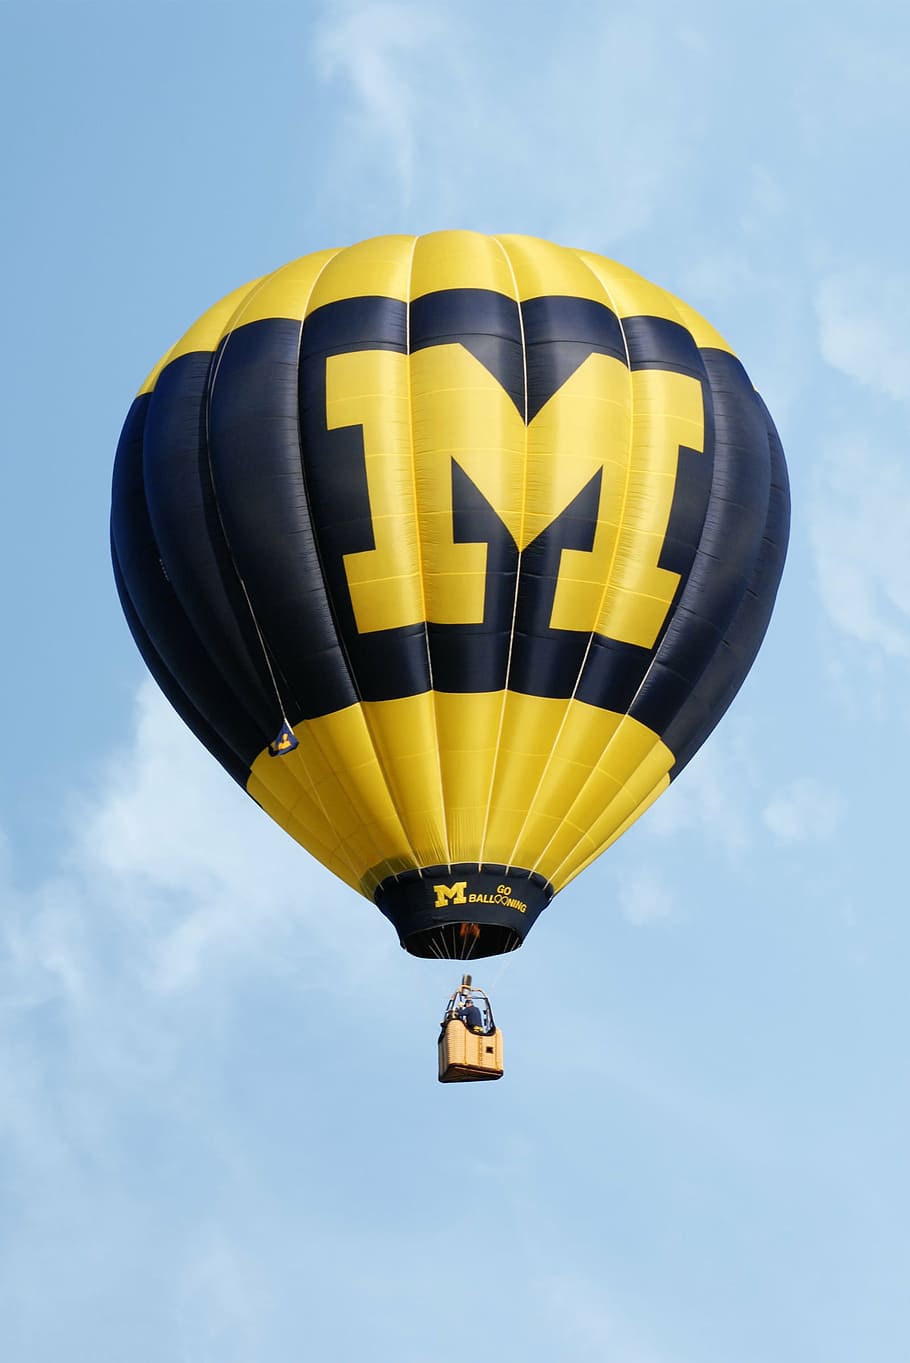 Black And Yellow Hot Air Balloon, University Of Michigan, - Michigan Wolverines Hot Air Balloon - HD Wallpaper 